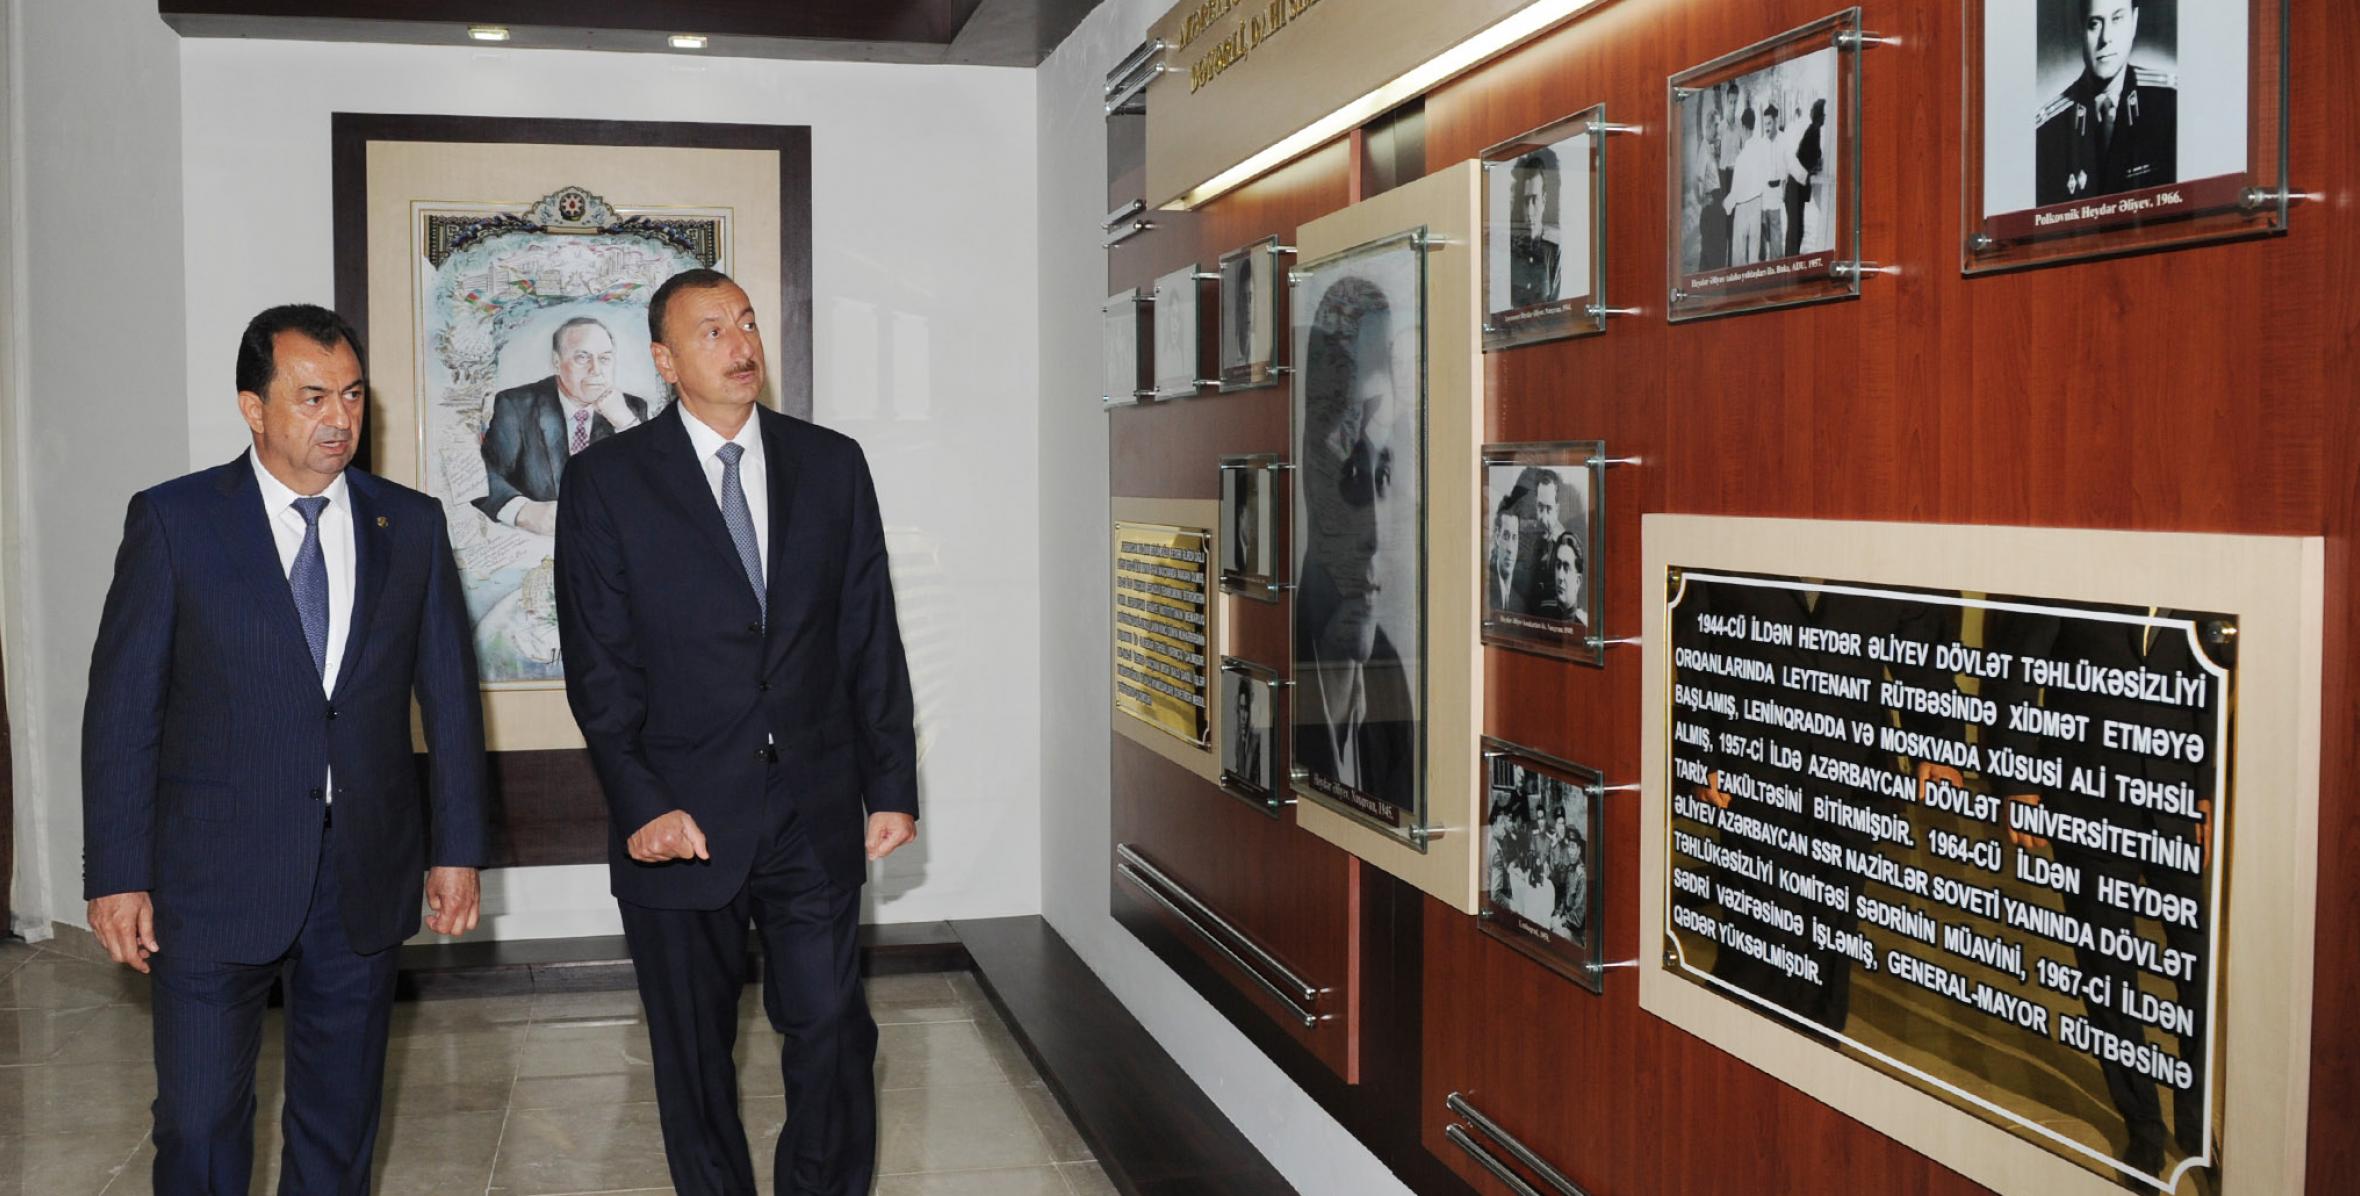 Ilham Aliyev attended the opening of the Heydar Aliyev Center in Lankaran after reconstruction